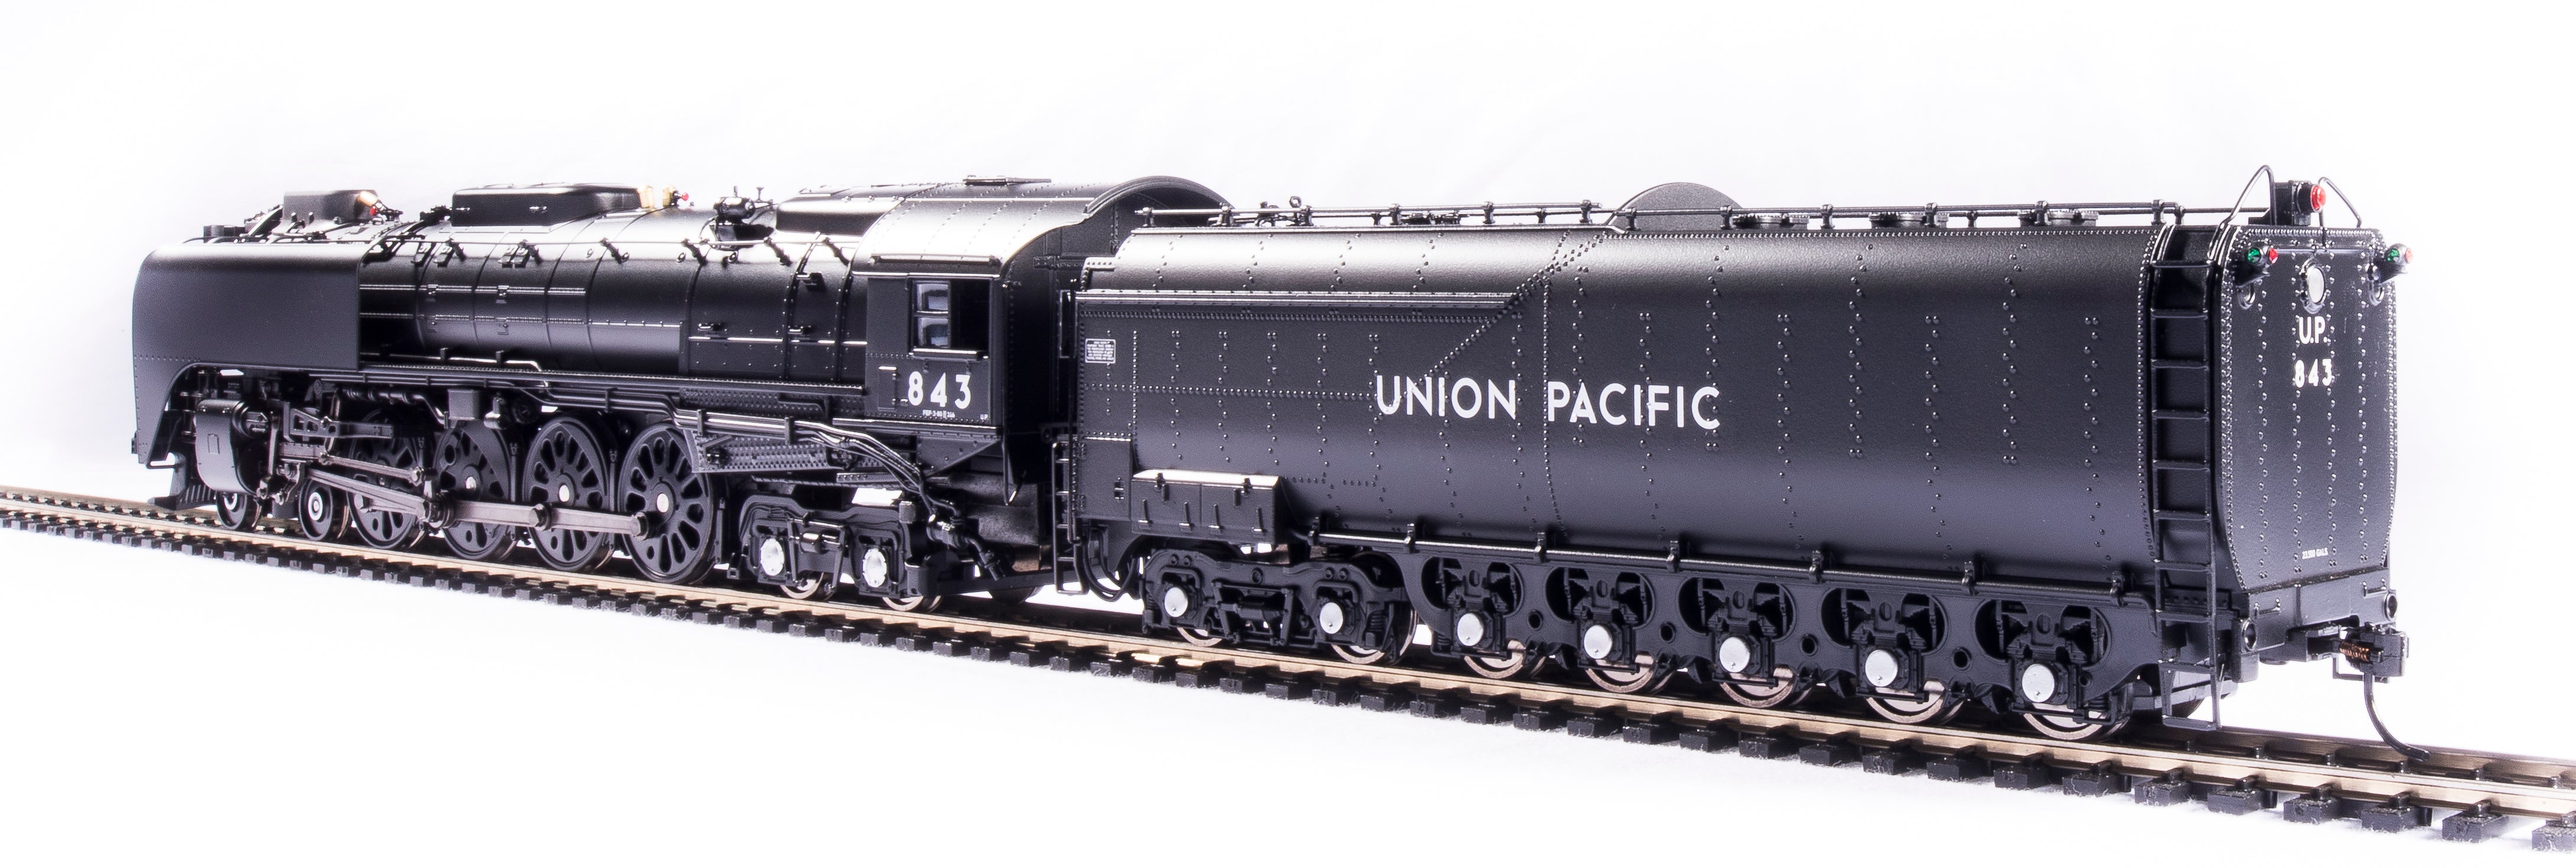 6641 Union Pacific 4-8-4, Class FEF-3, #843, Black & Graphite, Paragon4 Sound/DC/DCC, Smoke, HO